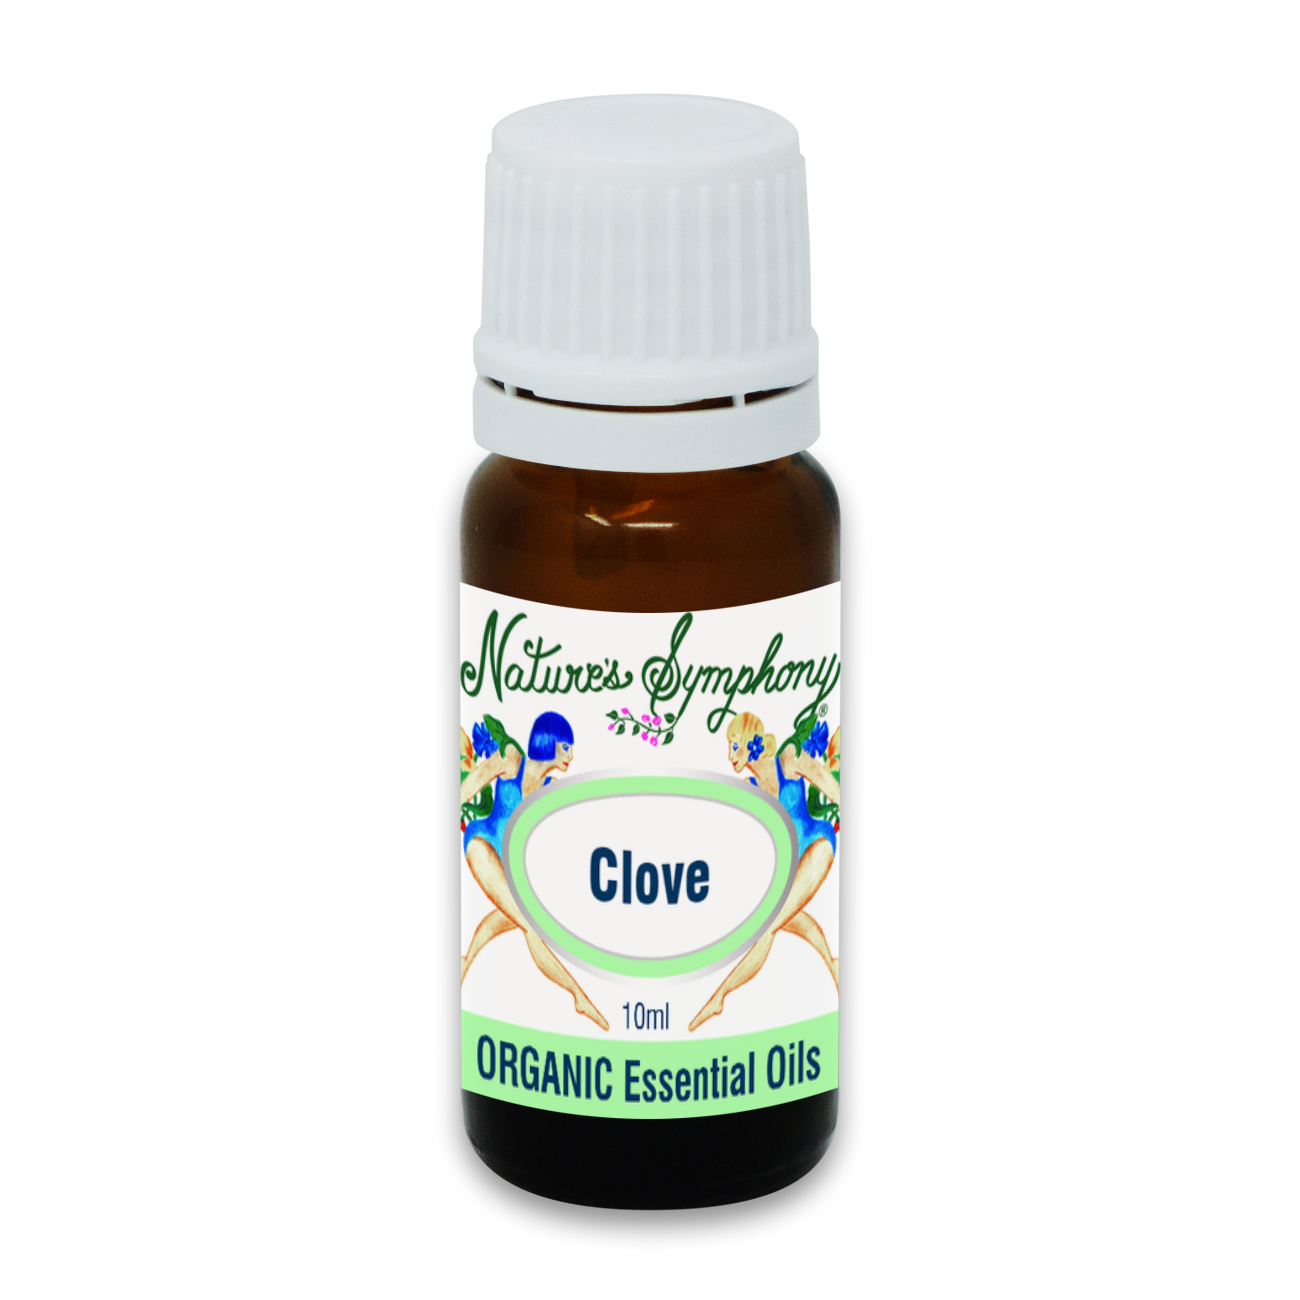 Clove, Organic/Wildcrafted oil - 10ml